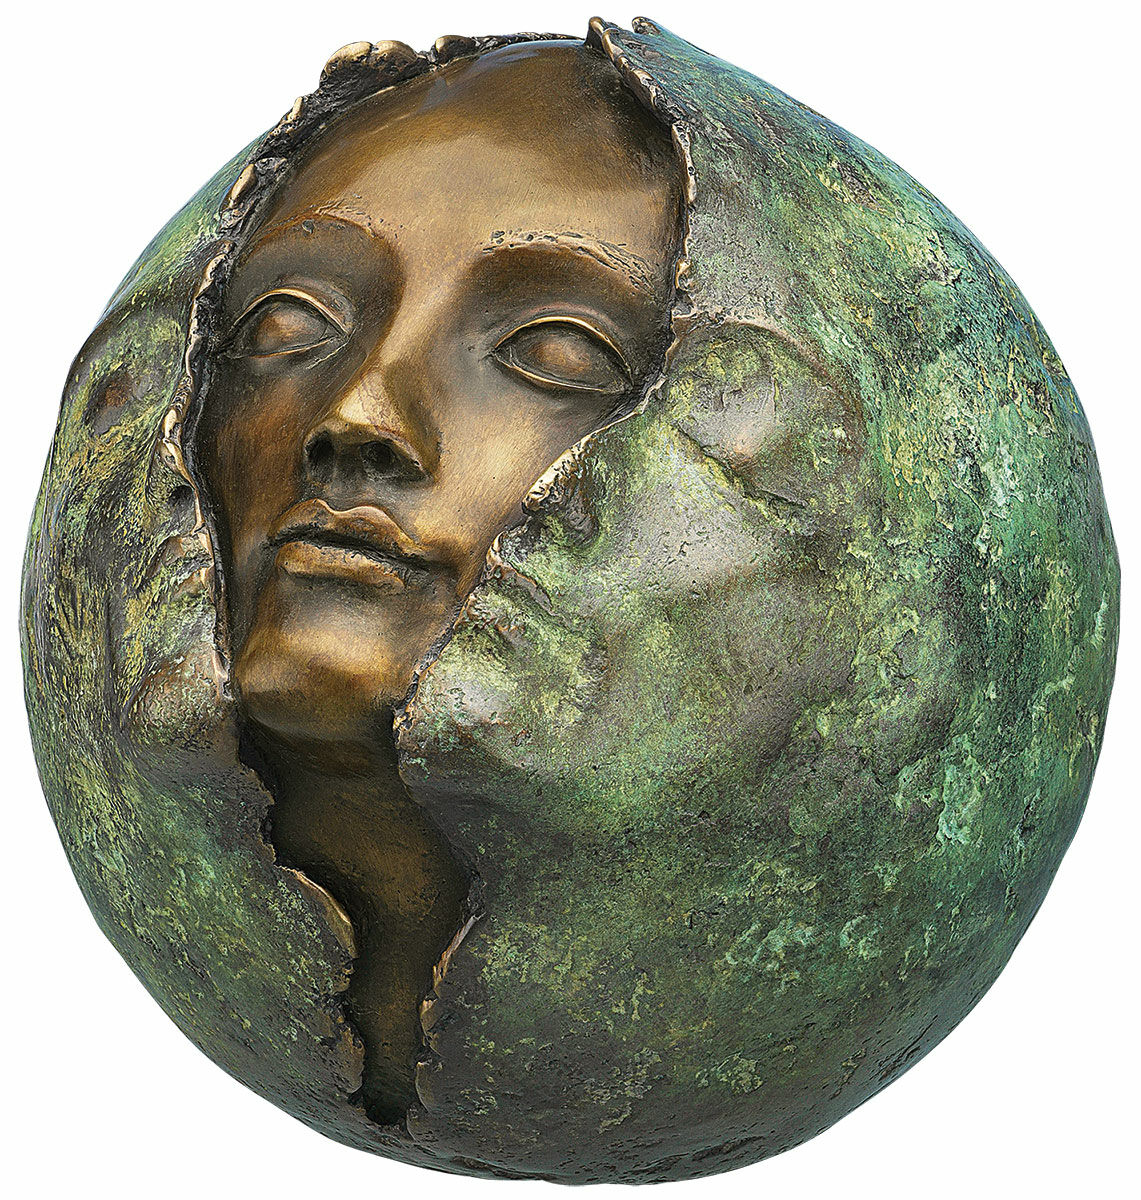 Sculpture "Metamorphosis", bronze by Maria-Luise Bodirsky